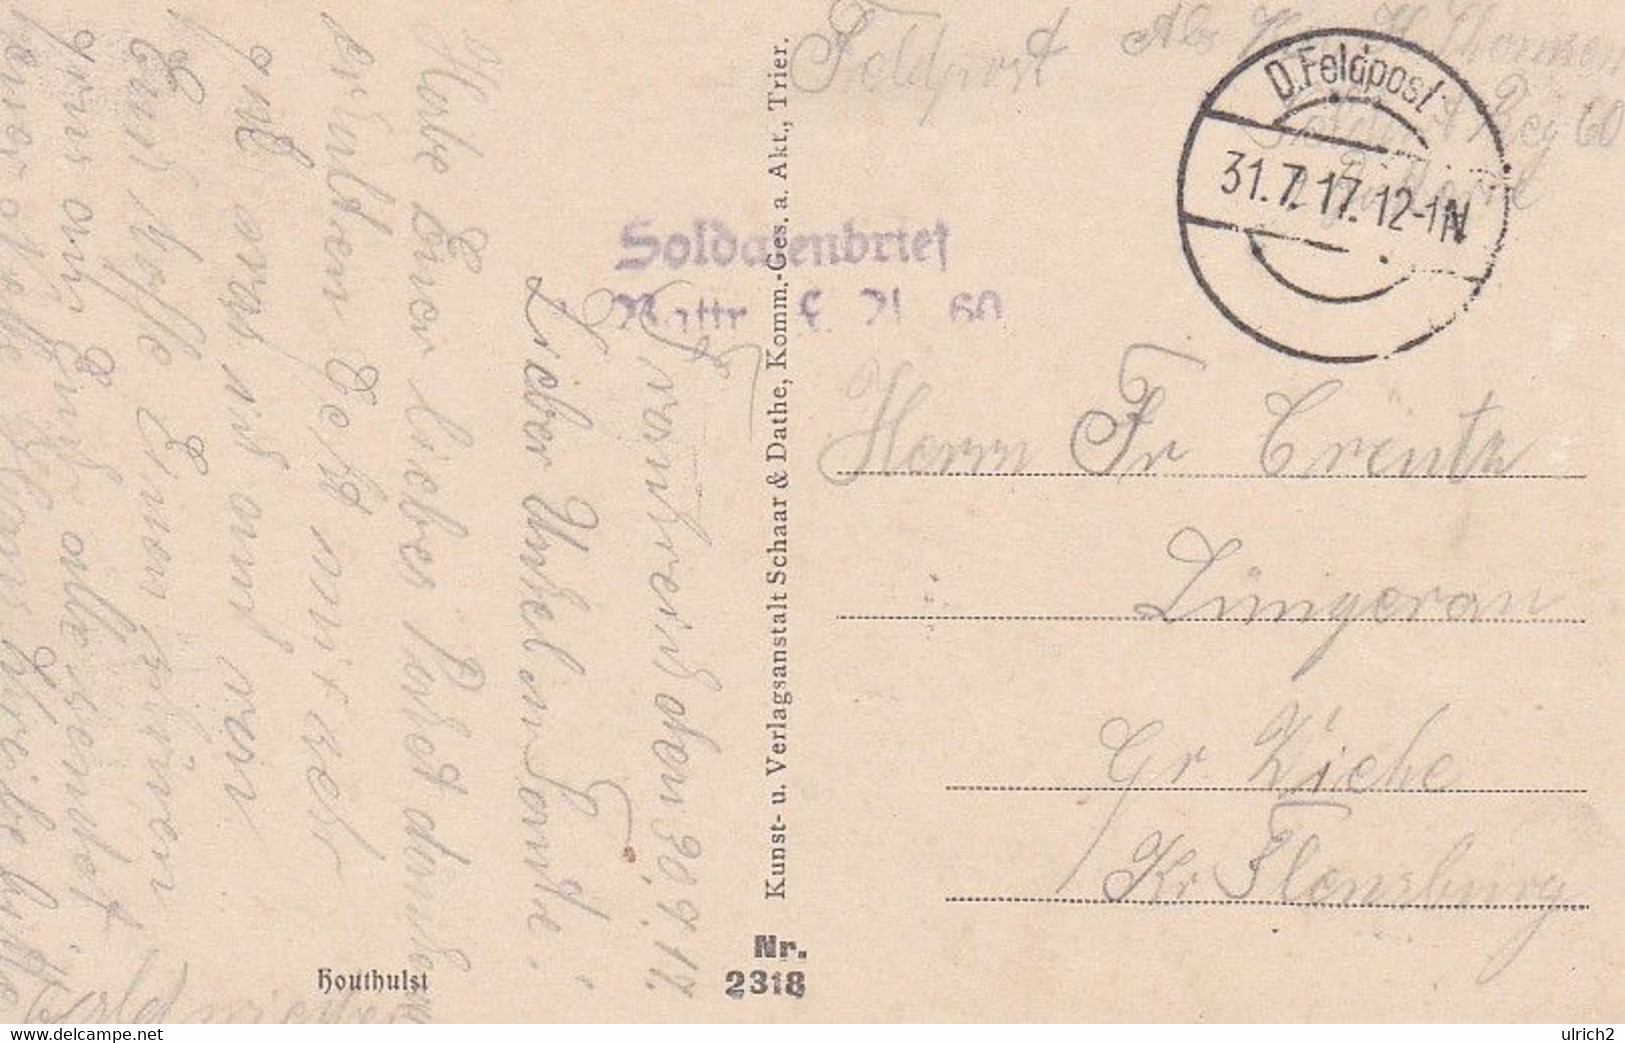 AK Houthulst - Lazarett Mit Friedhof - Feldpost Feld-Art. Regt. 60 - 1917 (62946) - Houthulst